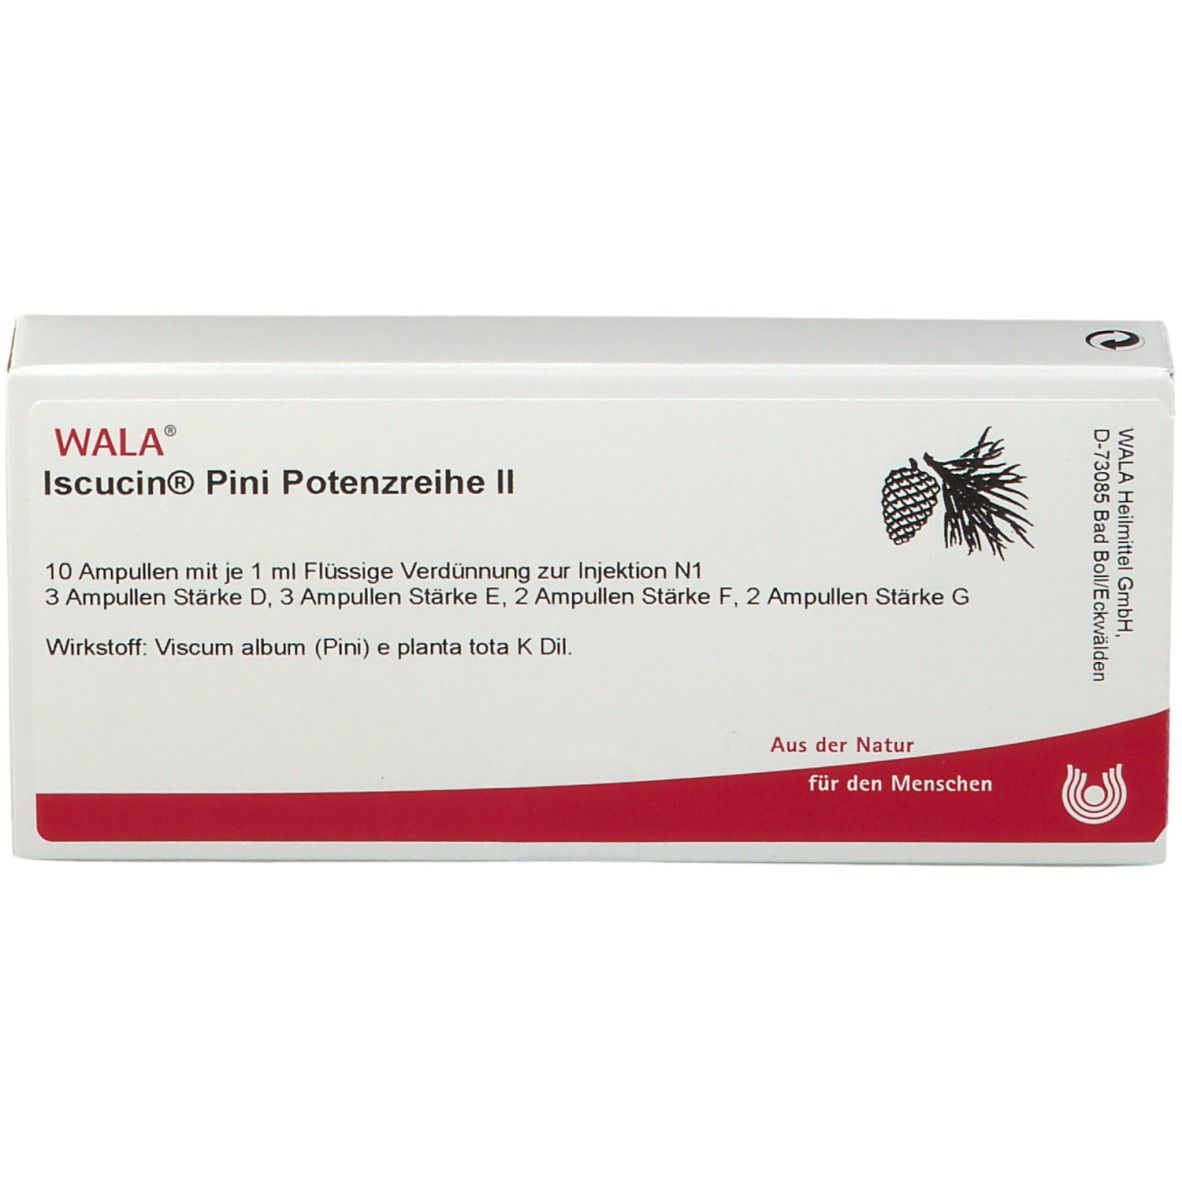 WALA® Iscucin Pini Potenzreihe Ii Amp.